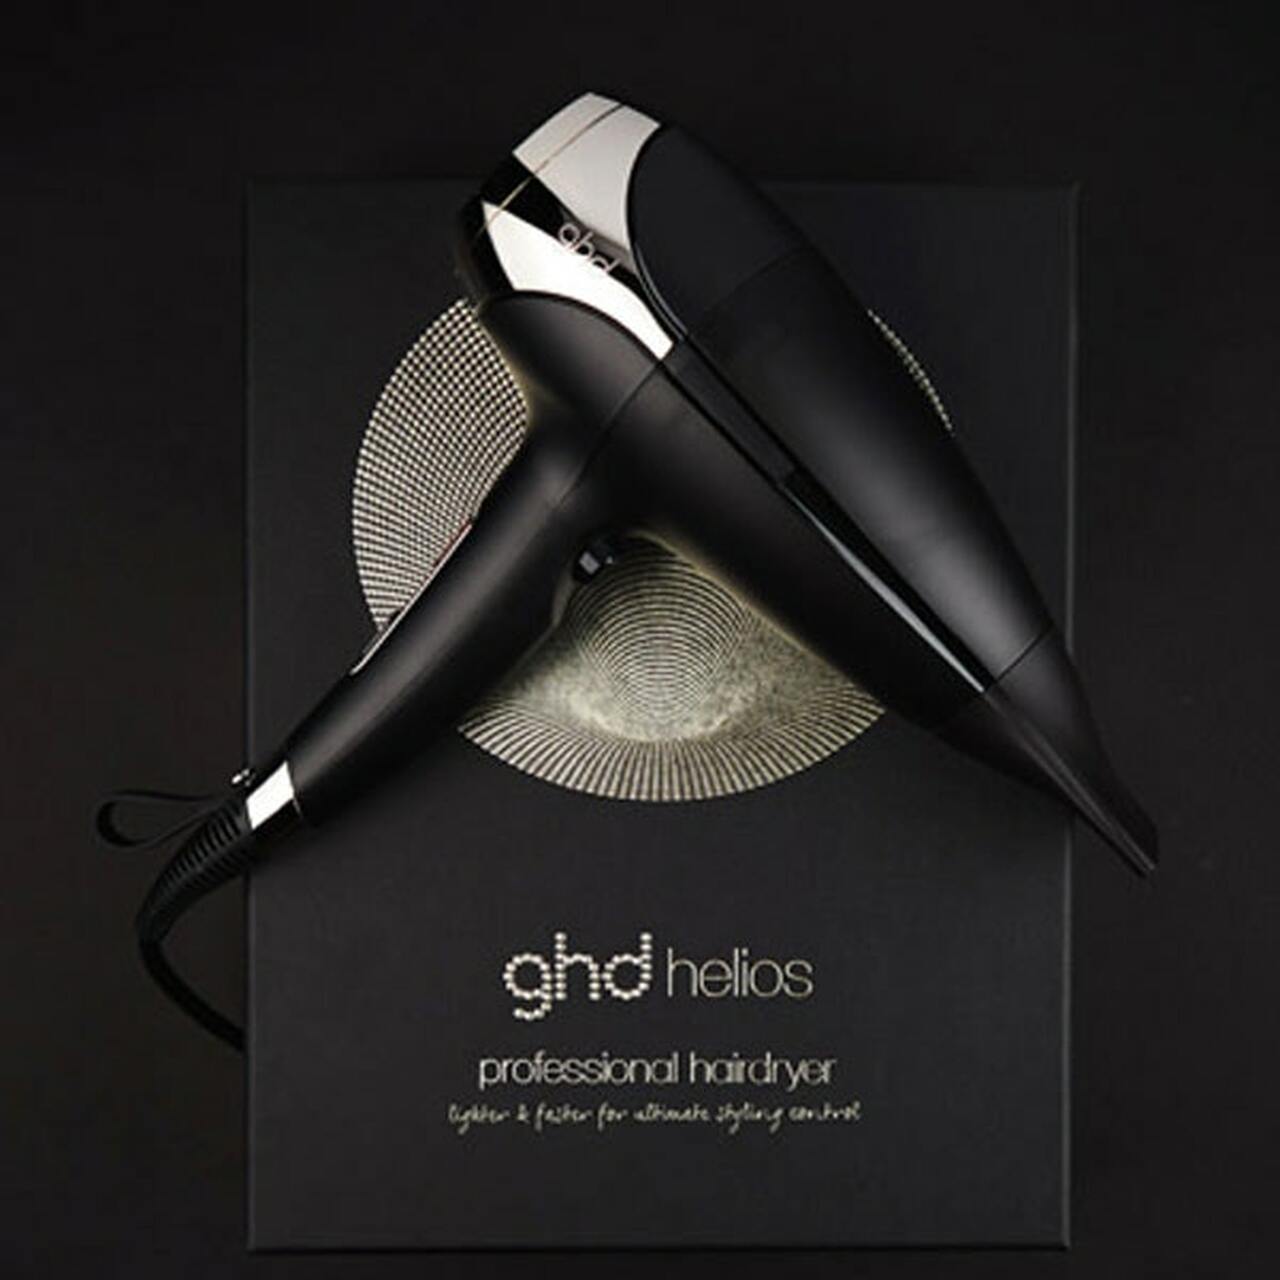 ghd Helios Professional Hair Dryer 